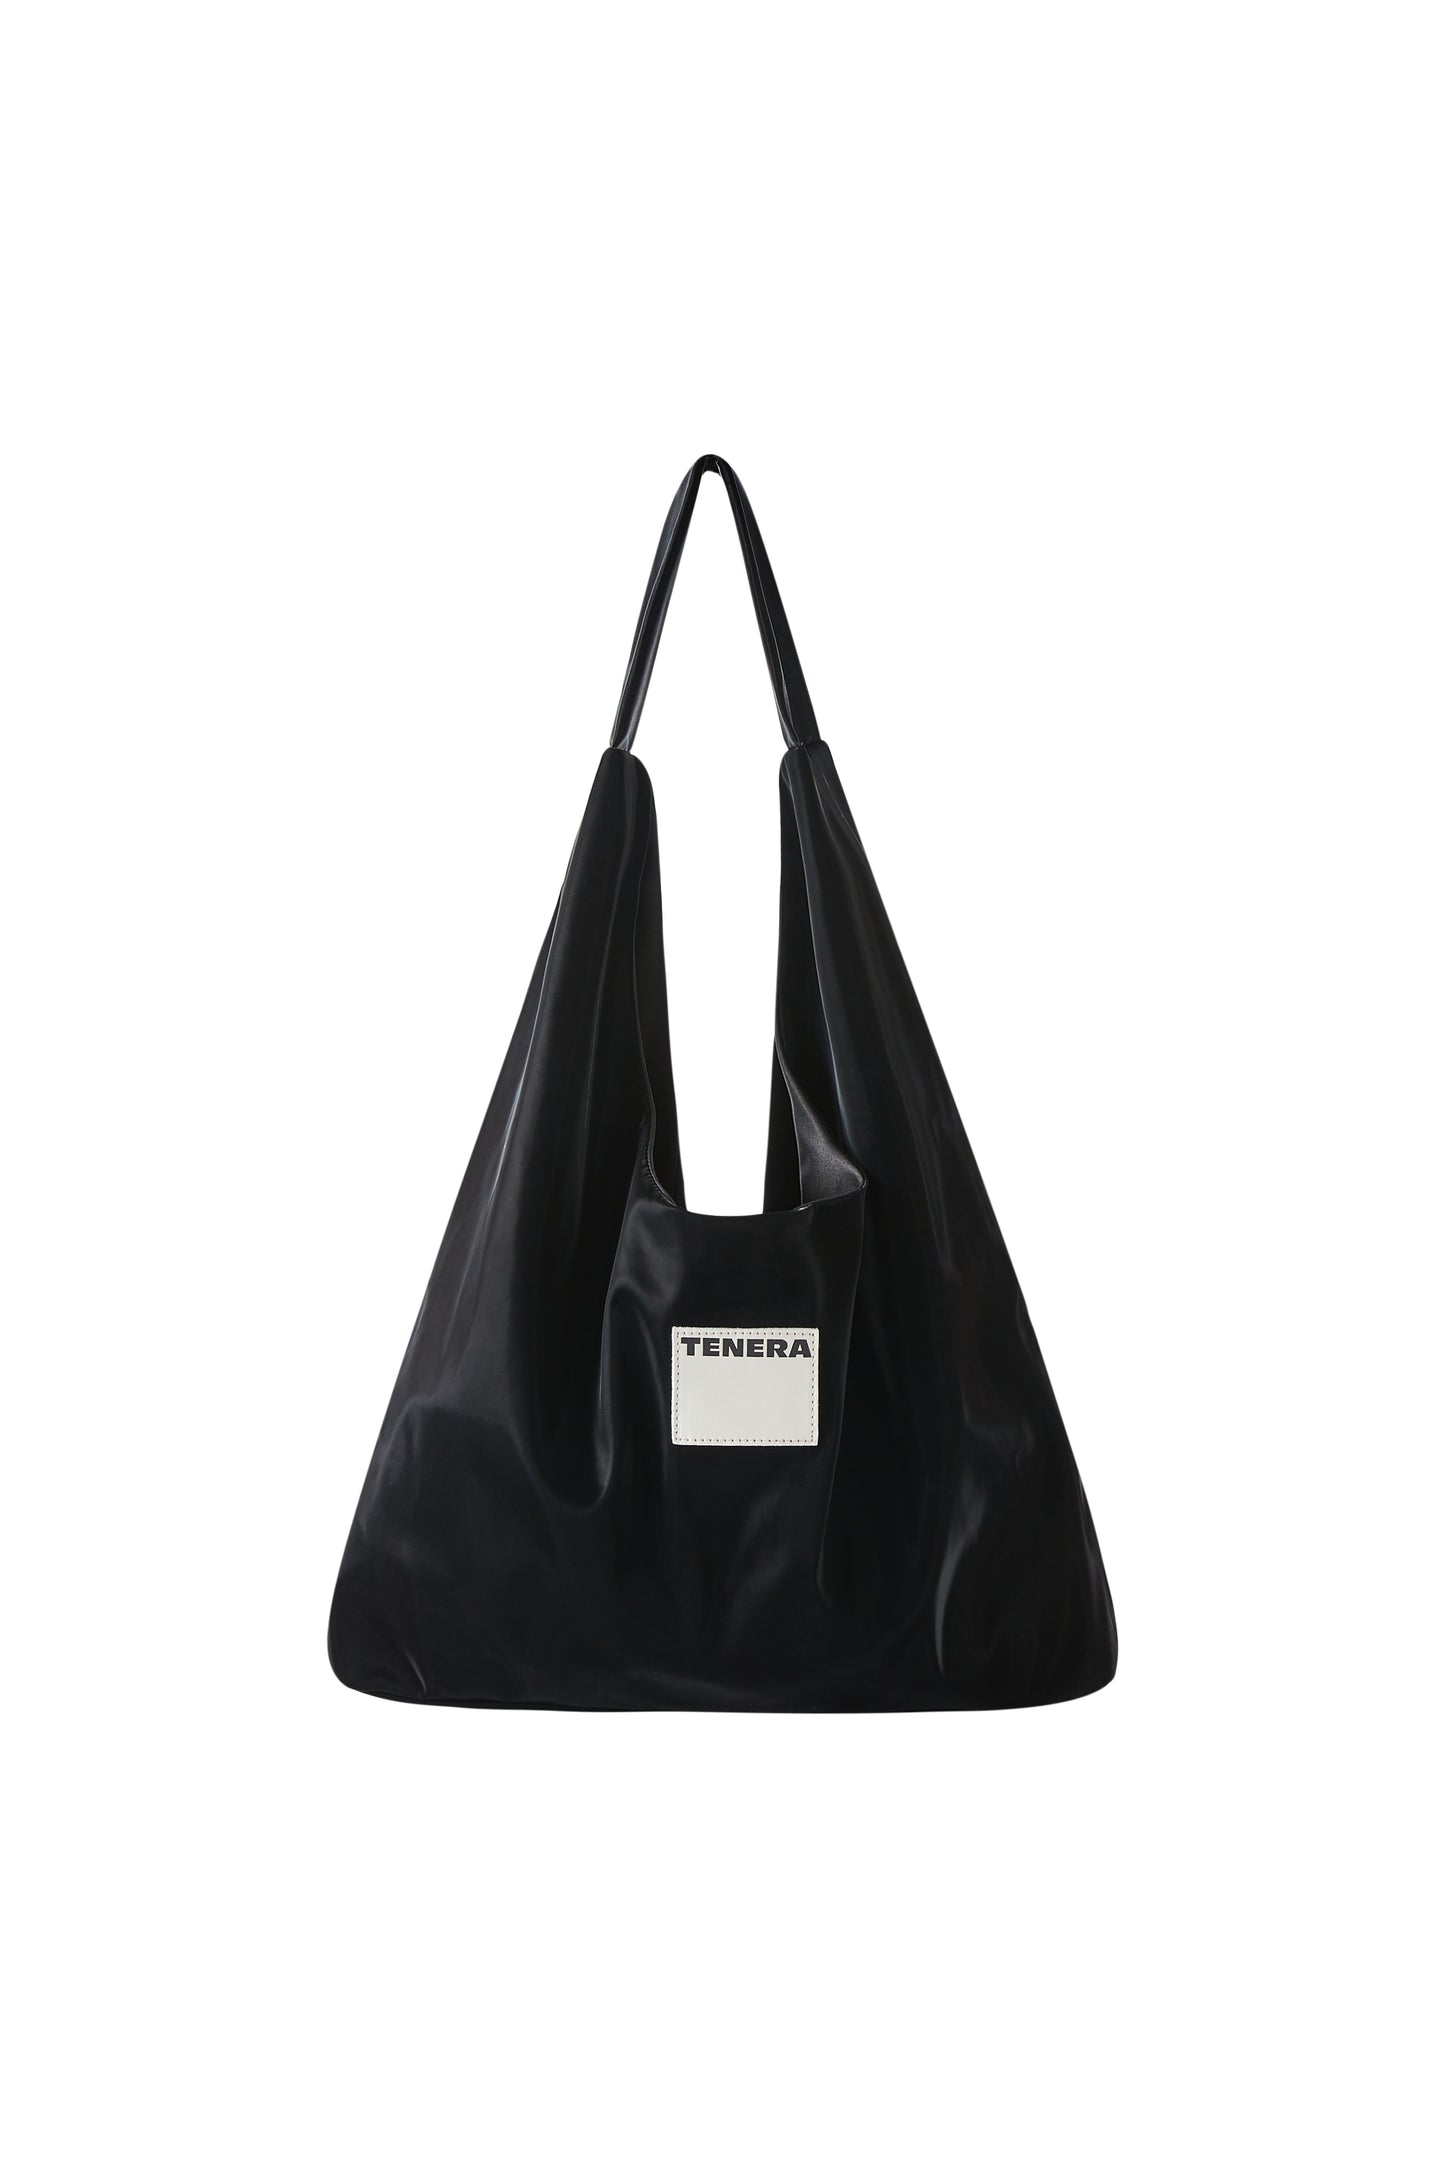 TENERA Eco-friendly Vegan Leather HOBO One-Shoulder Style/Black